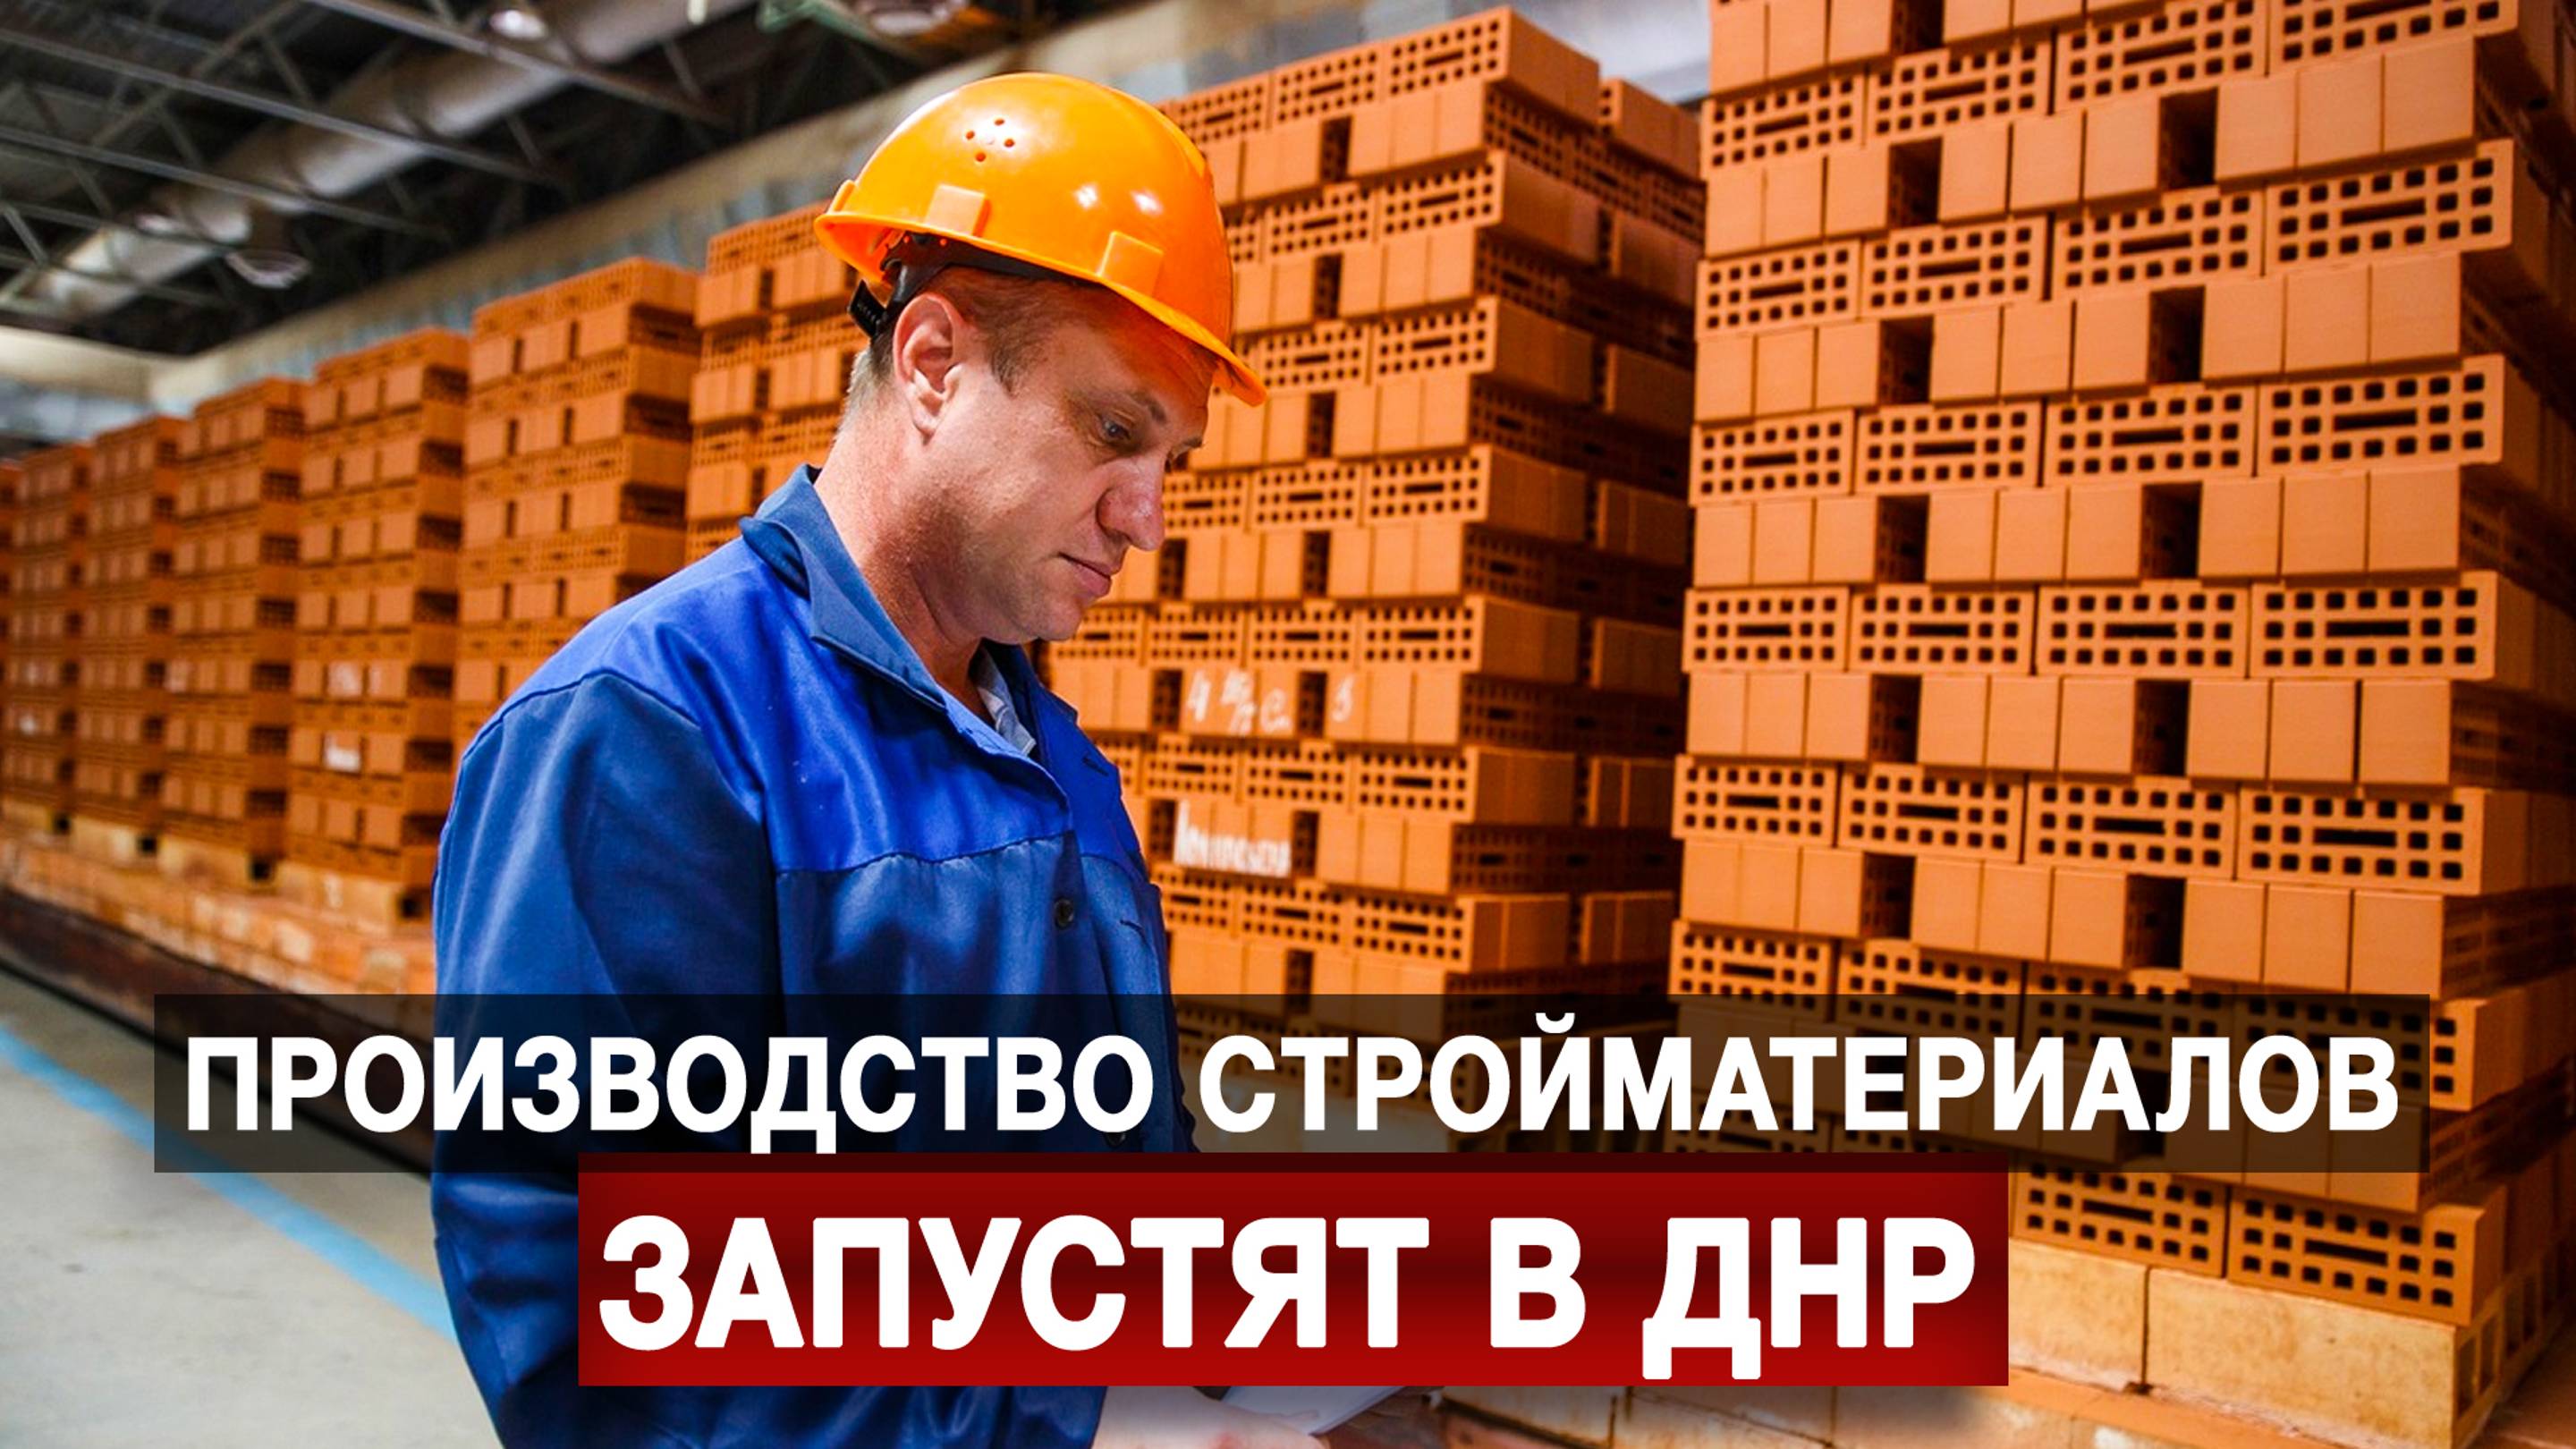 Производство стройматериалов запустят в ДНР